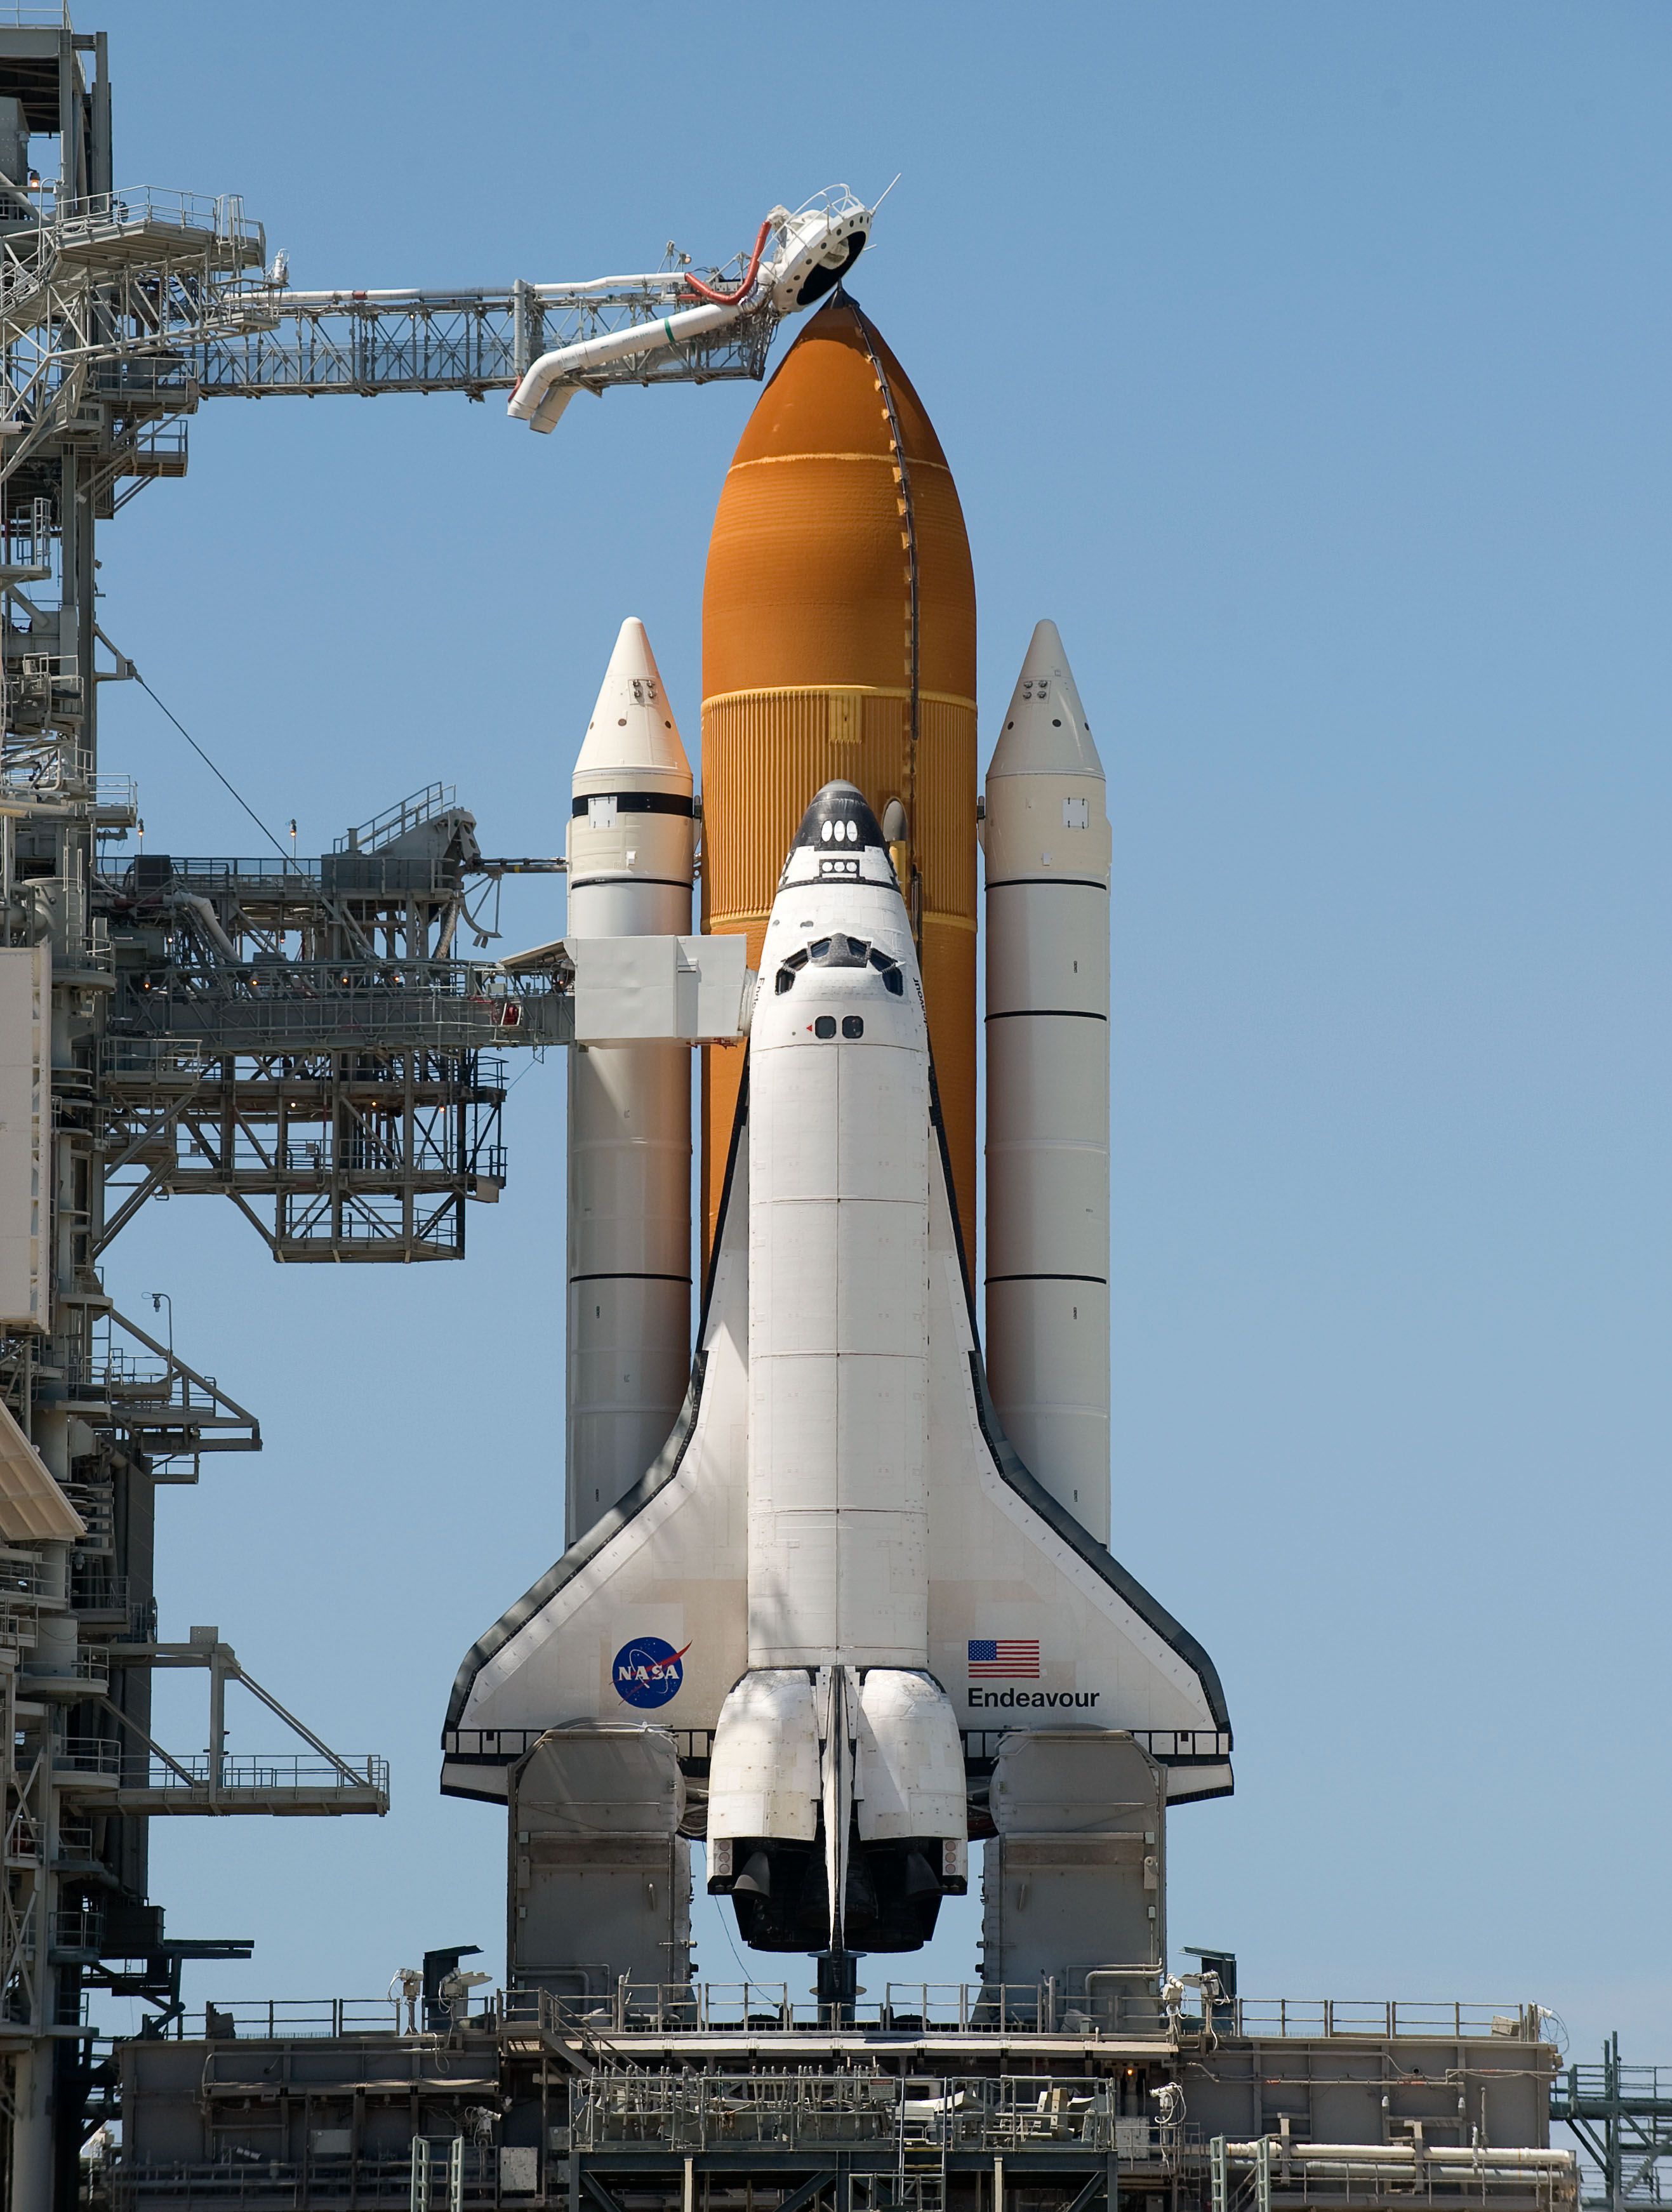 space shuttle endeavour launch - Google Search | NASA | Pinterest ...